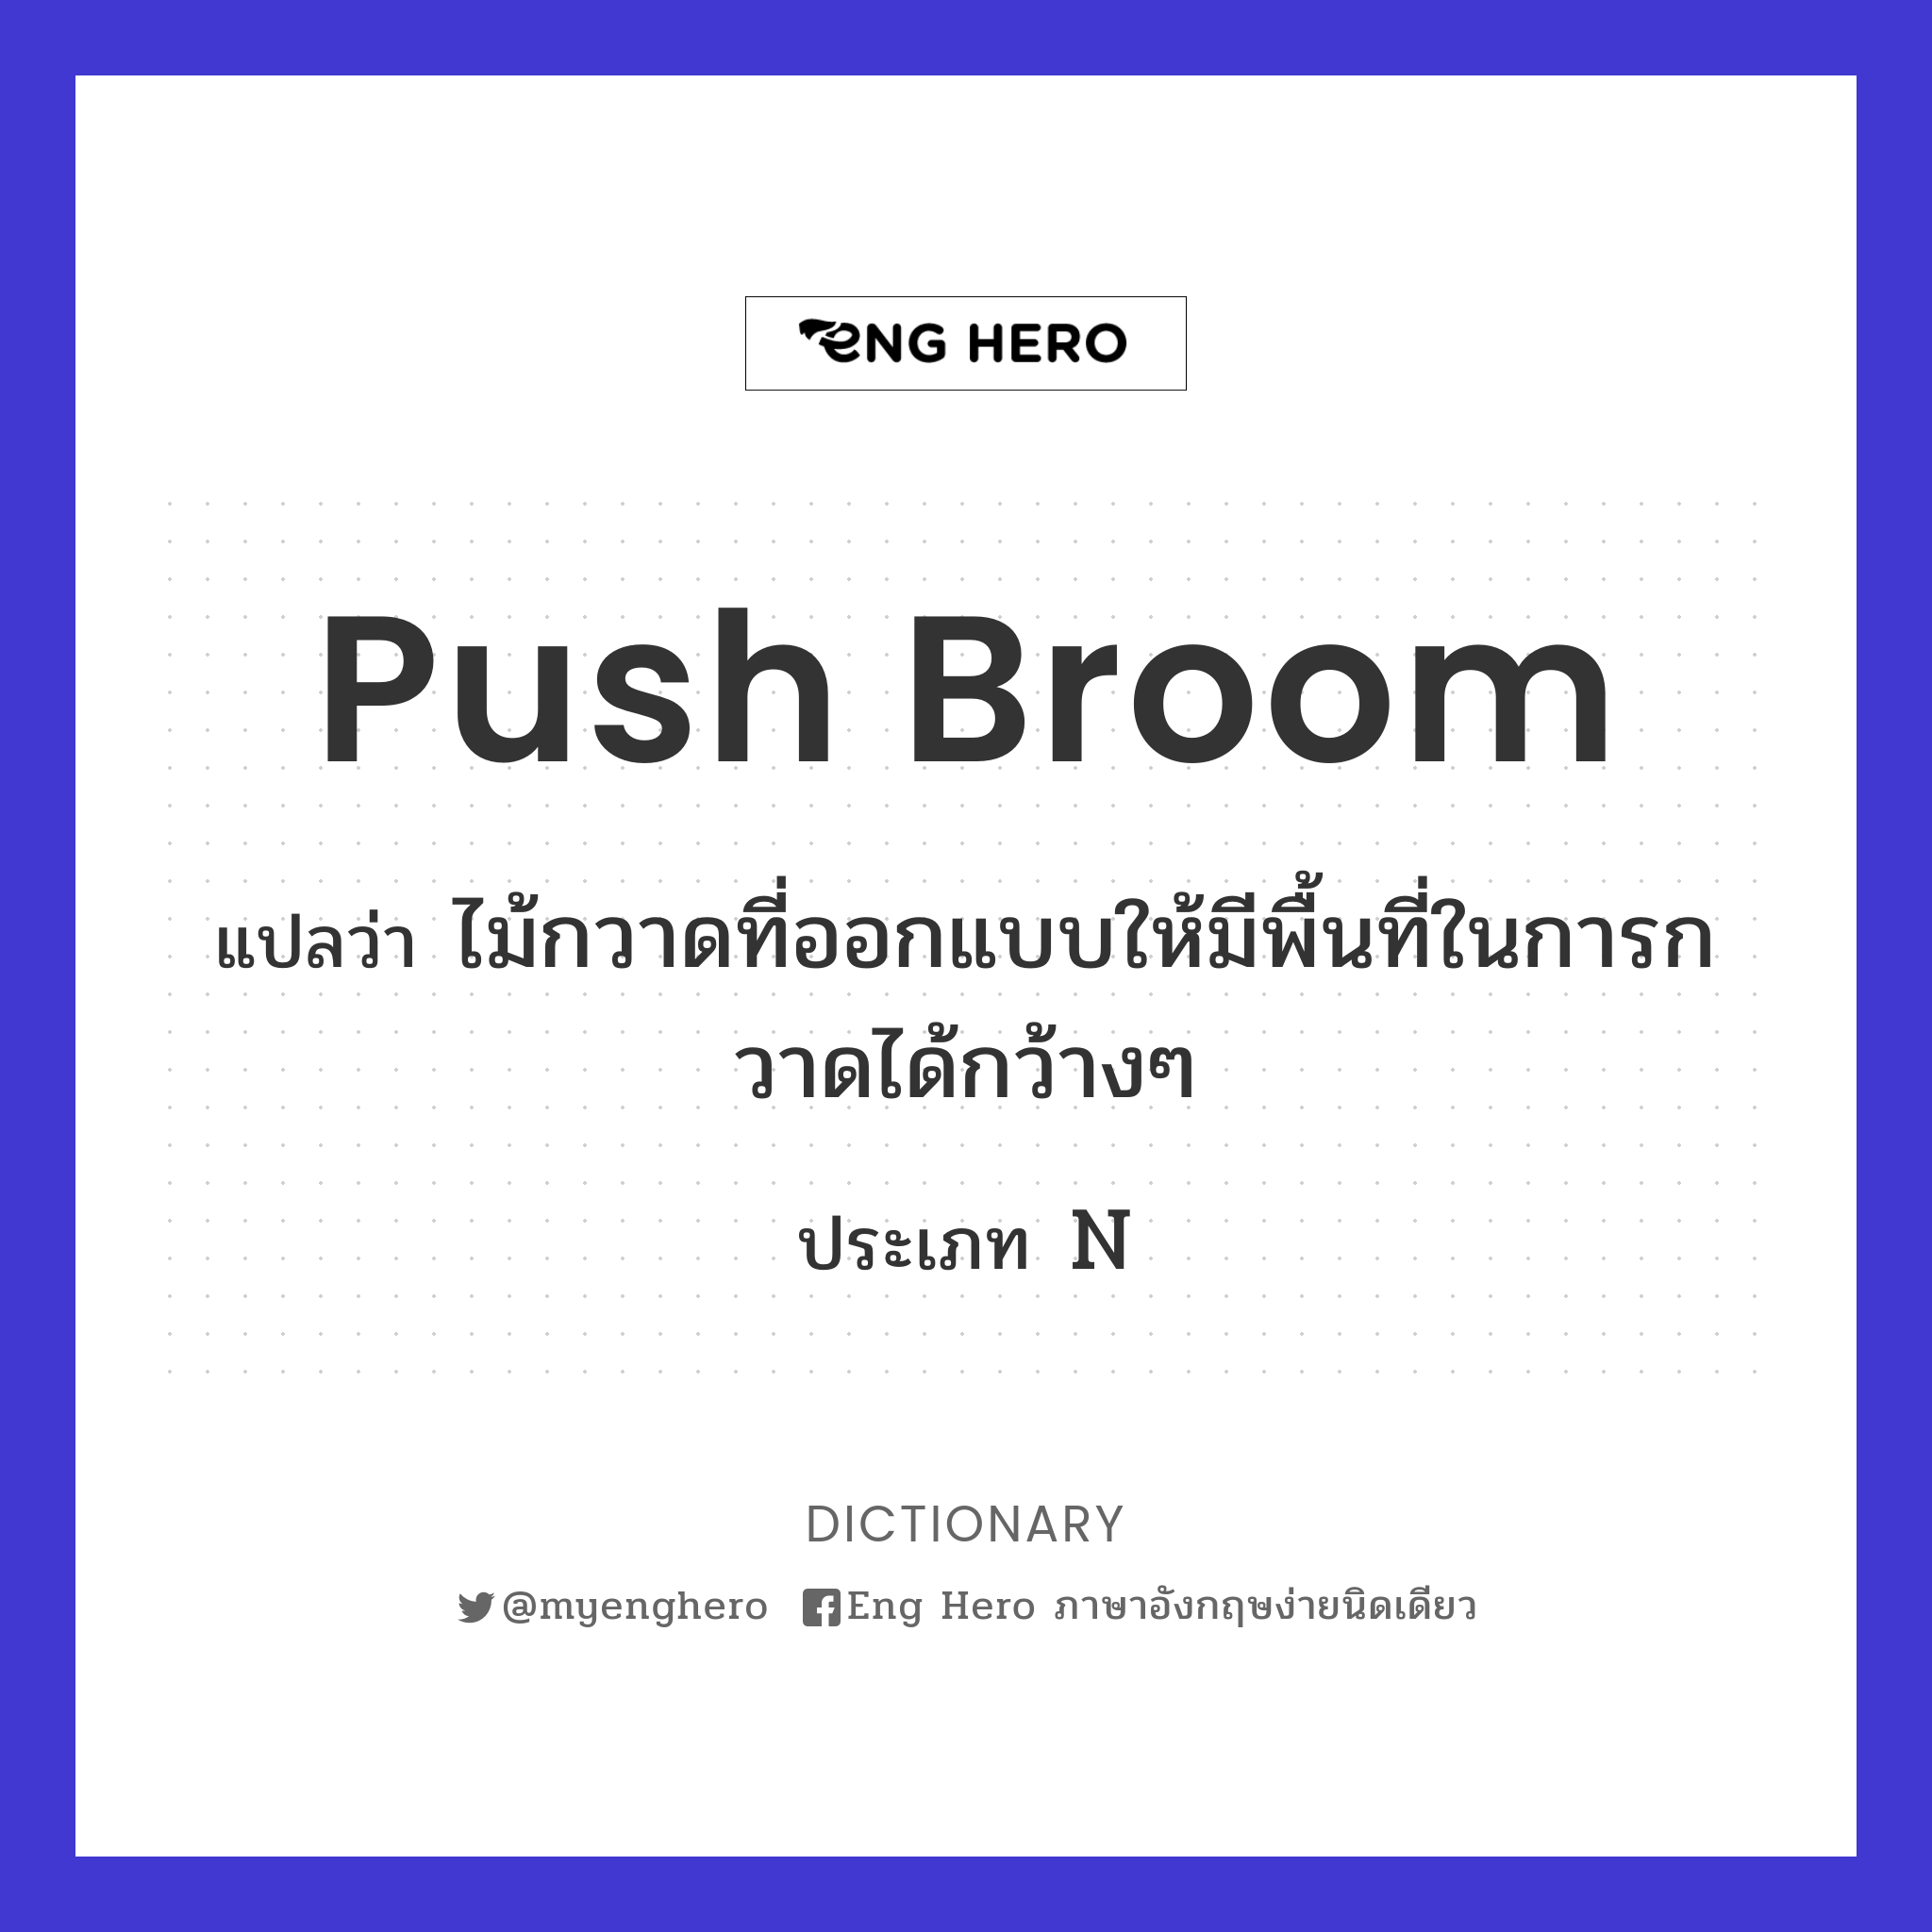 push broom